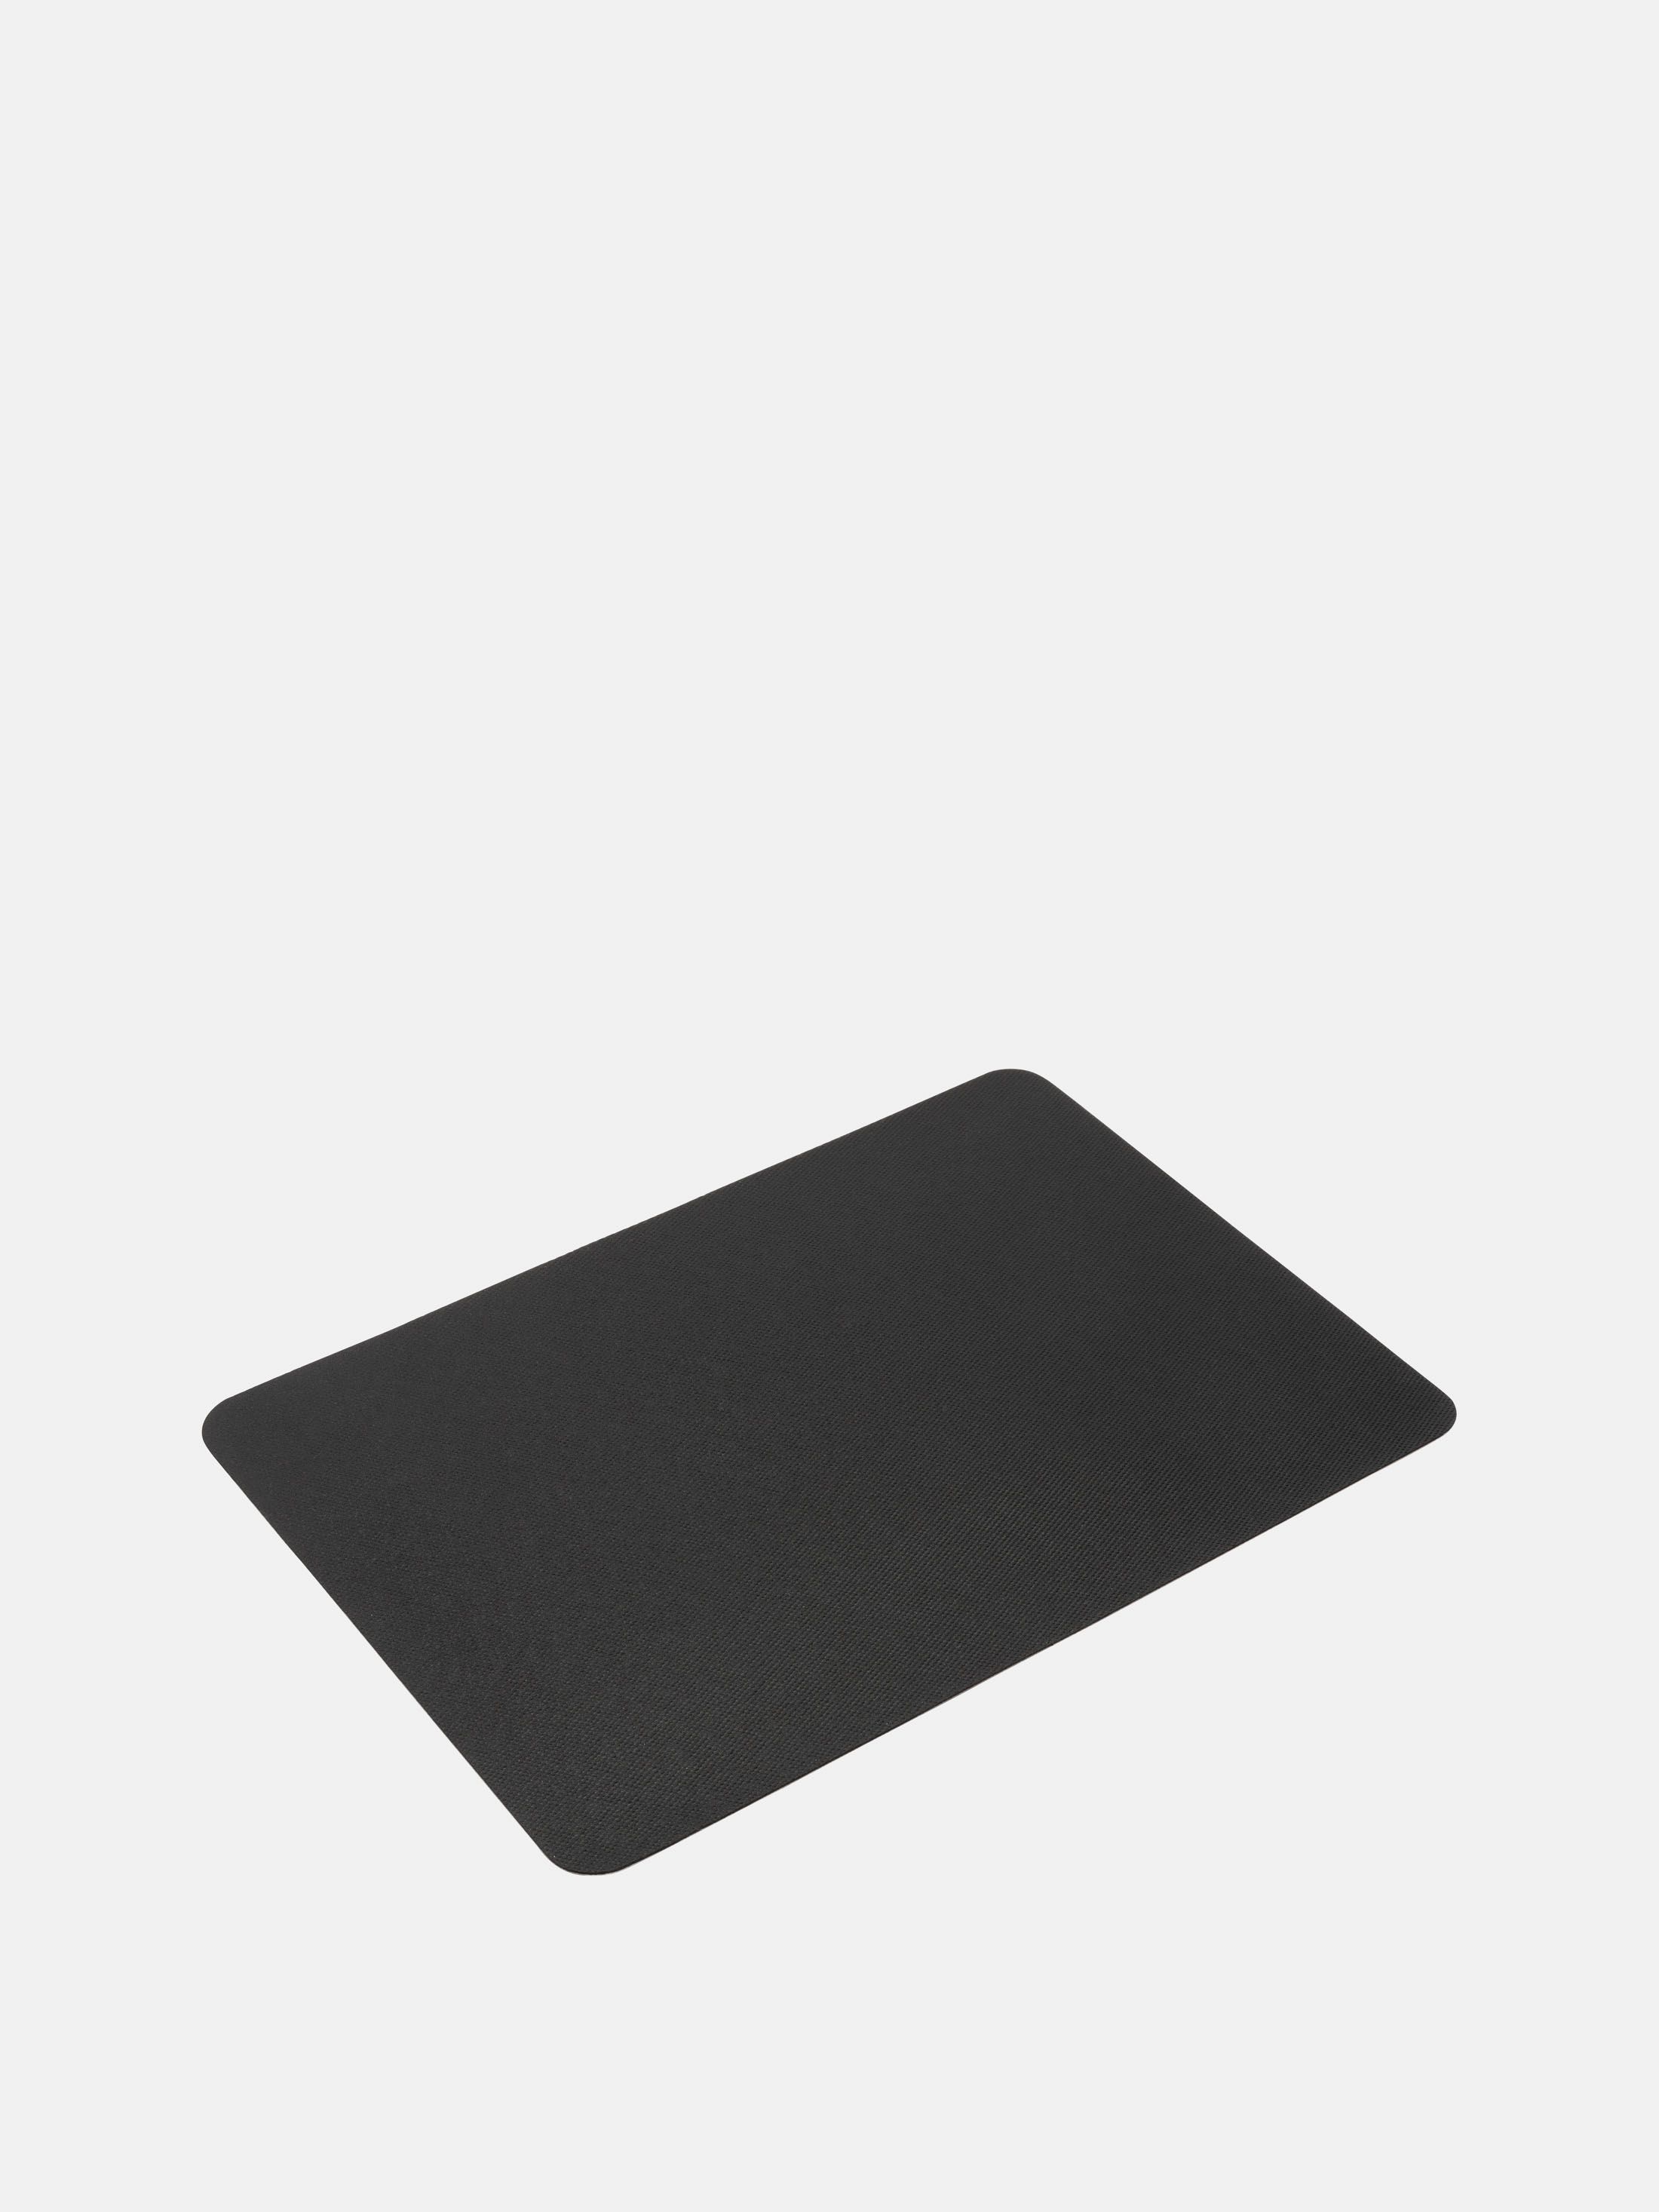 reverse side of the custom pet mat showing the black nonslip rubber